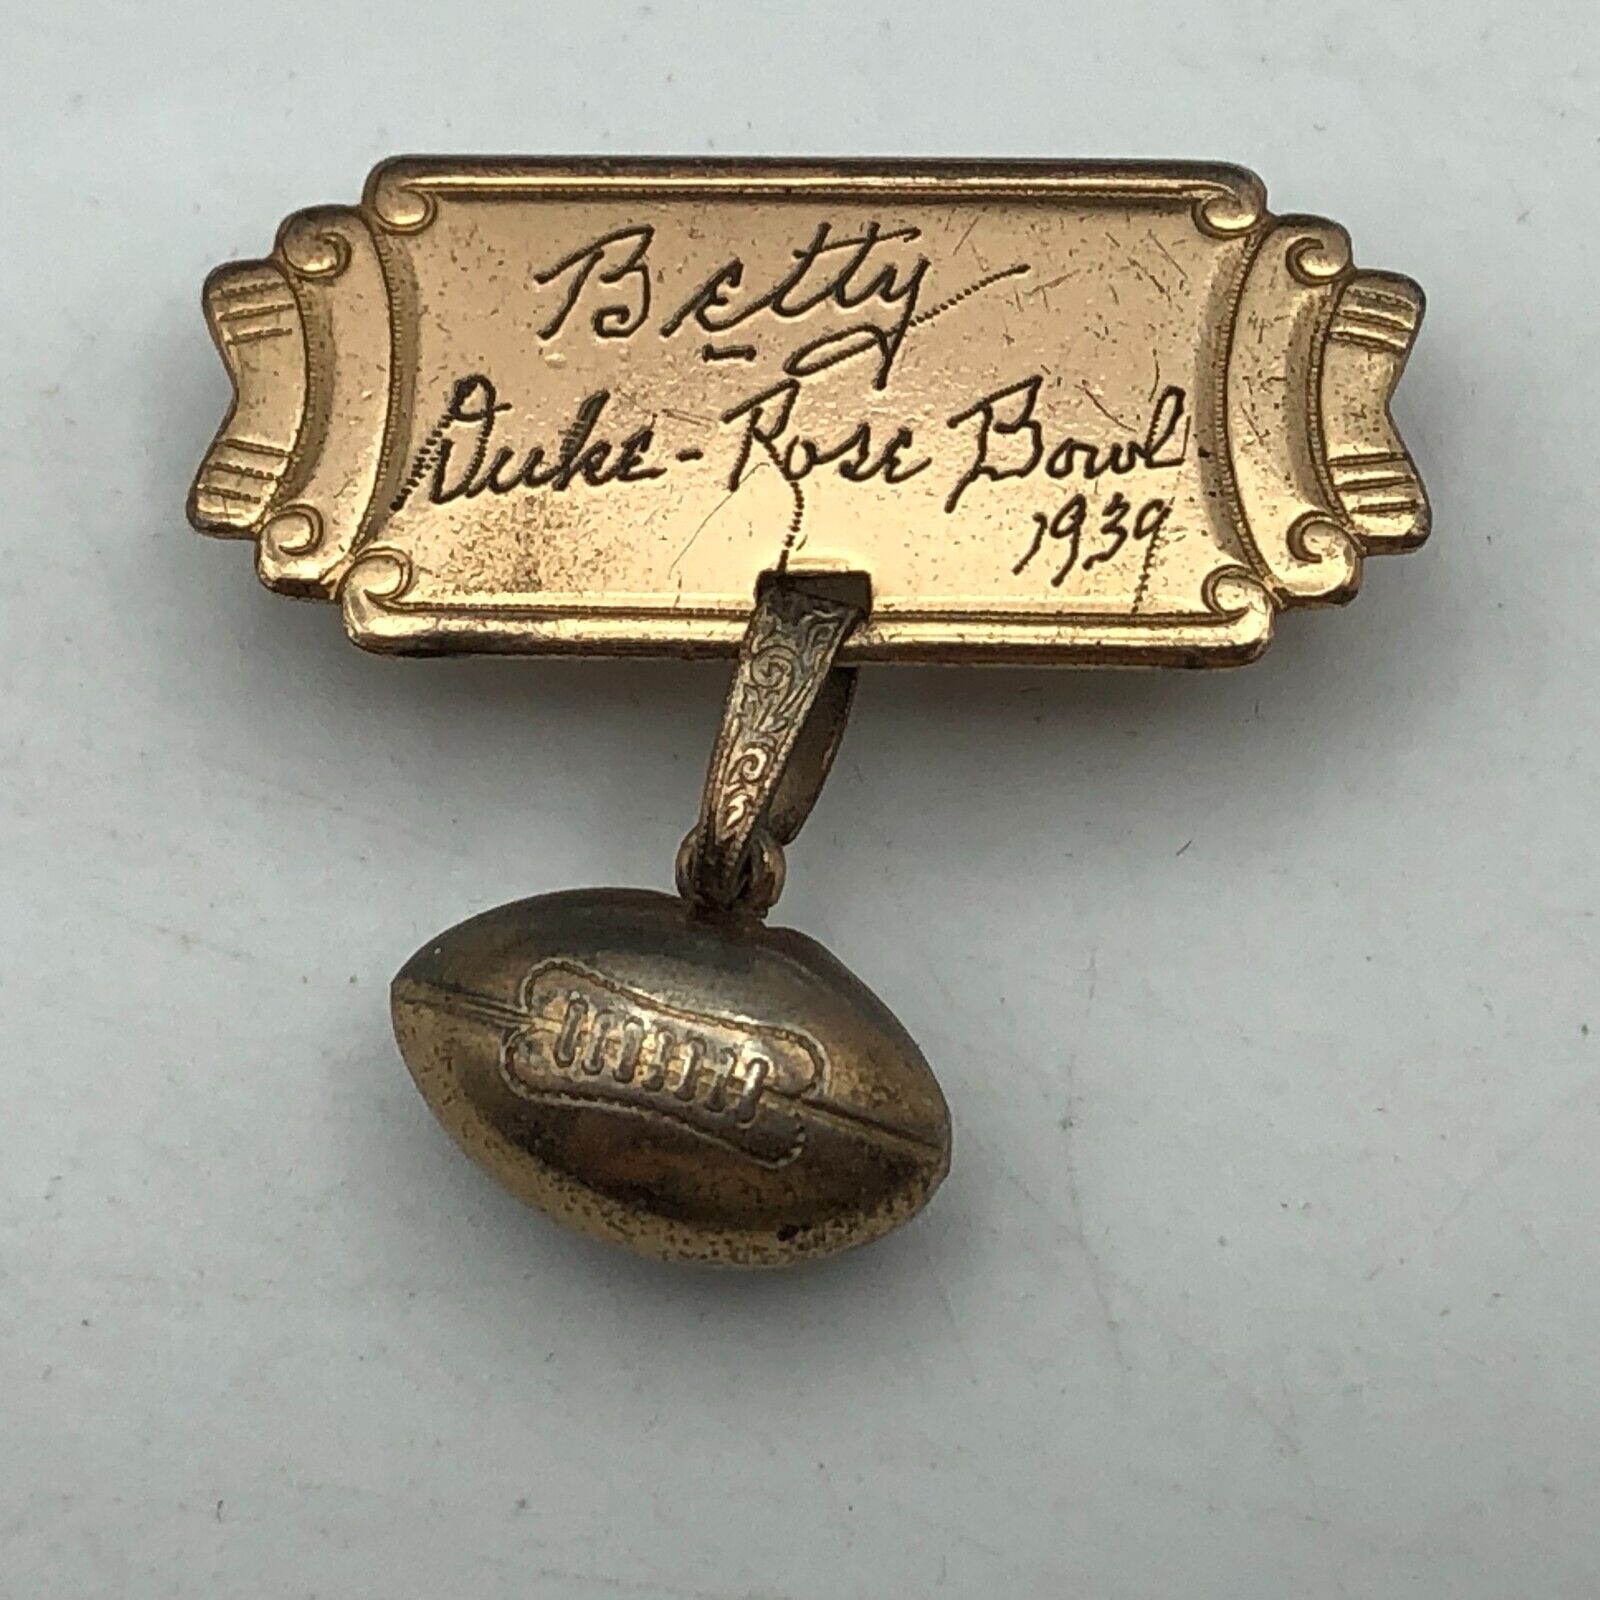 1939 DUKE UNIVERSITY ROSE BOWL Pin Brooch Football Charm BETTY Rare Vintage